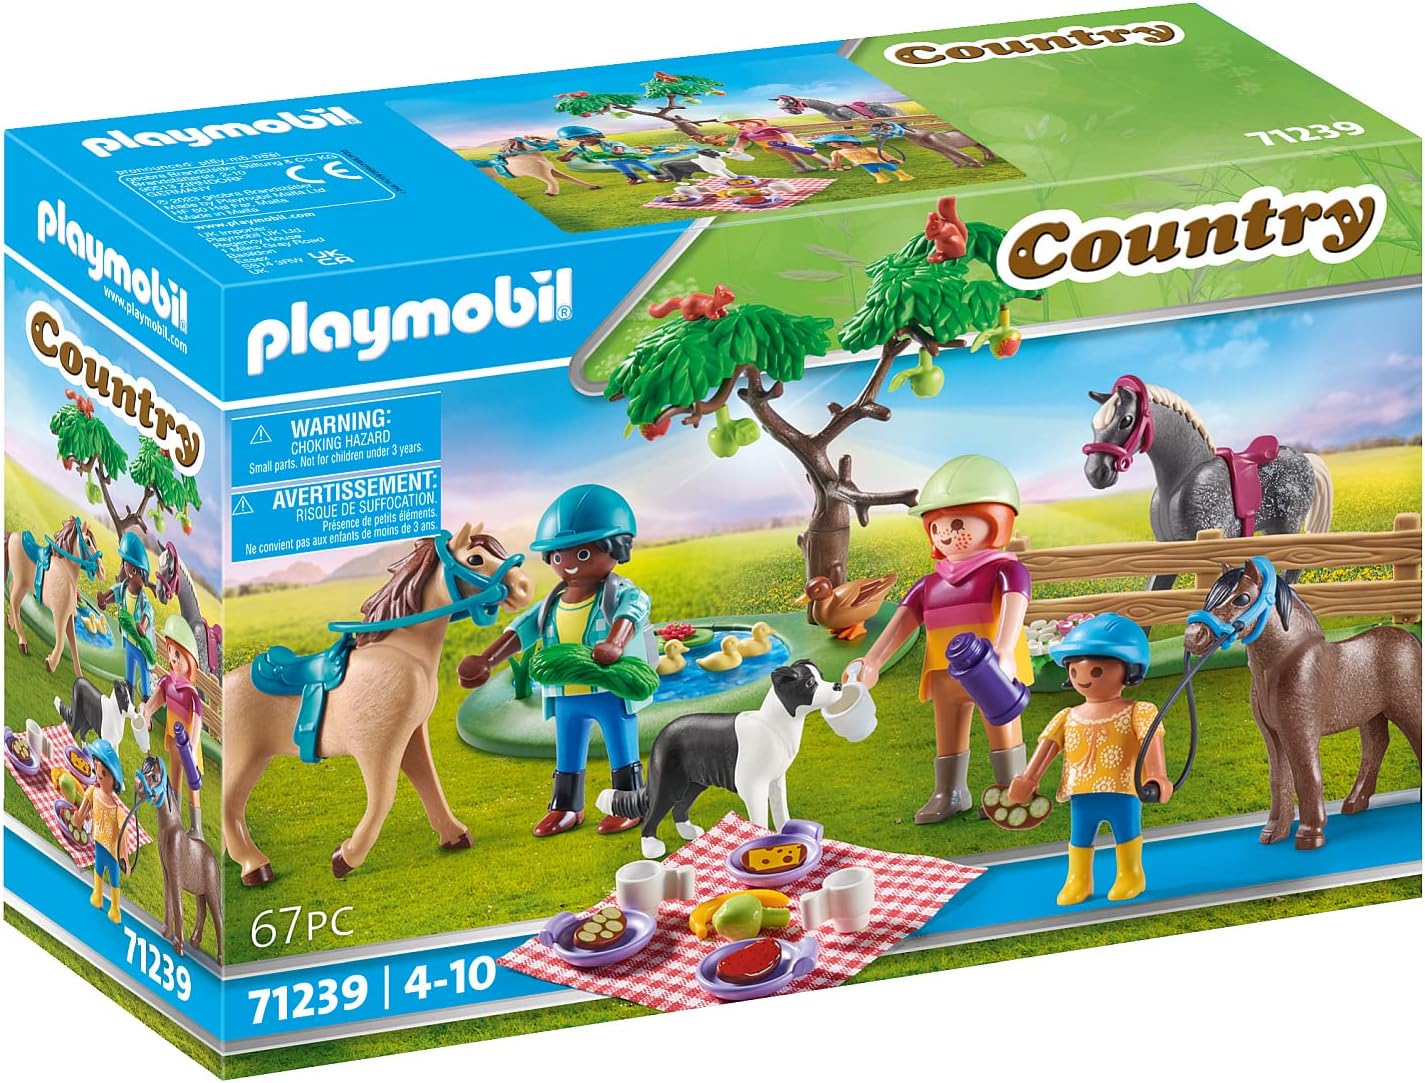 PLAYMOBIL Country 71239 Picknickausflug mit Pferden, Familienpicknick im Grünen